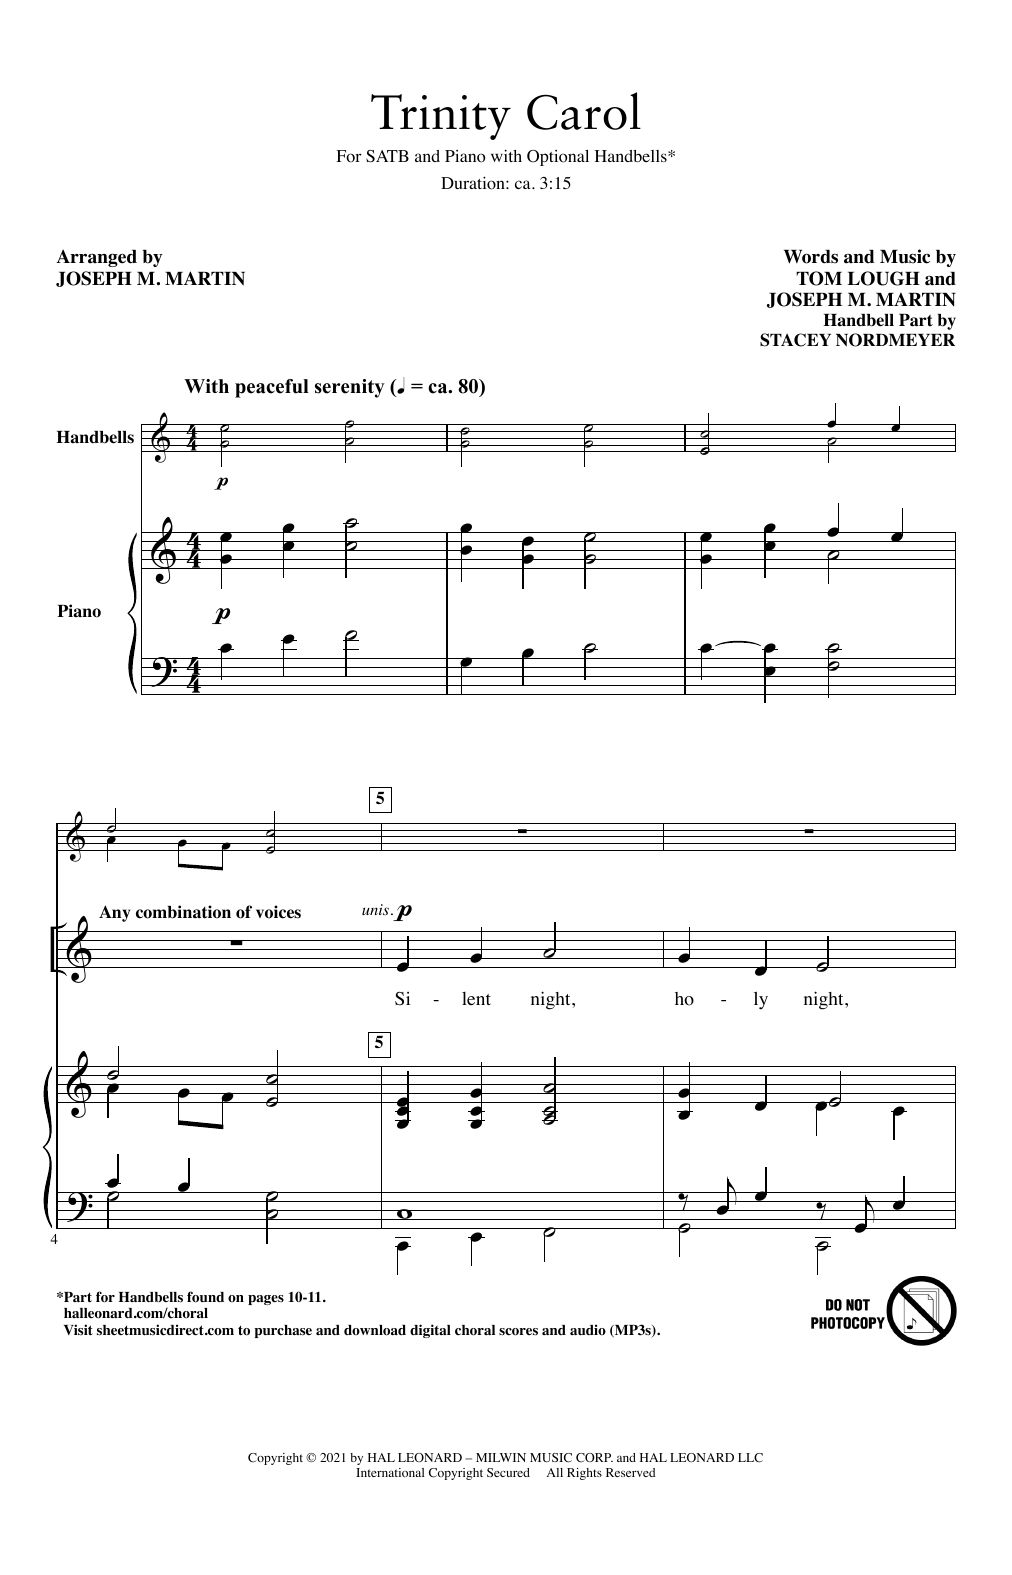 Download Tom Lough and Joseph M. Martin Trinity Carol (arr. Joseph M. Martin) Sheet Music